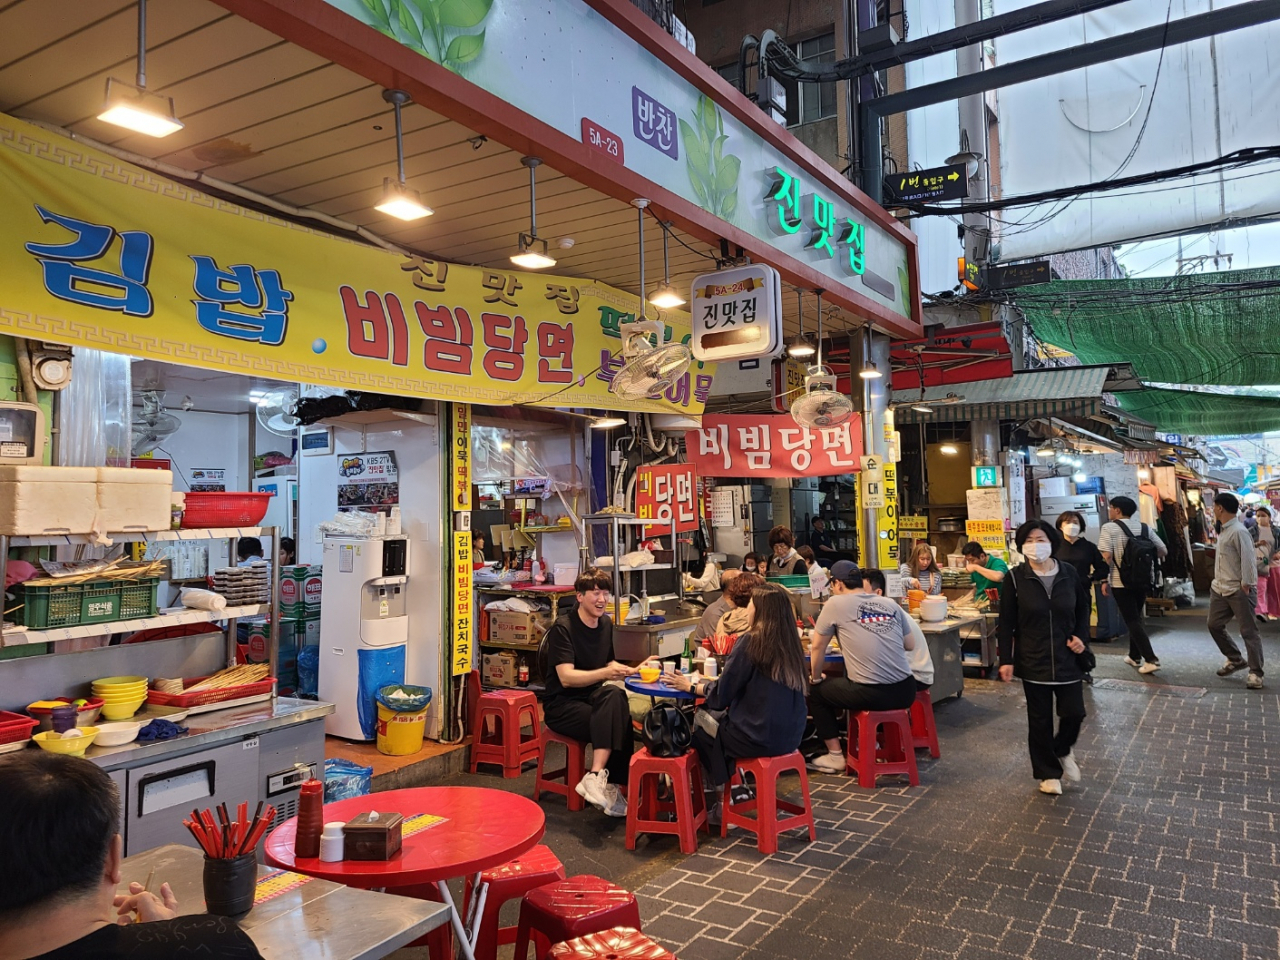 Visitors dine at a restaurant at Bupyeong 